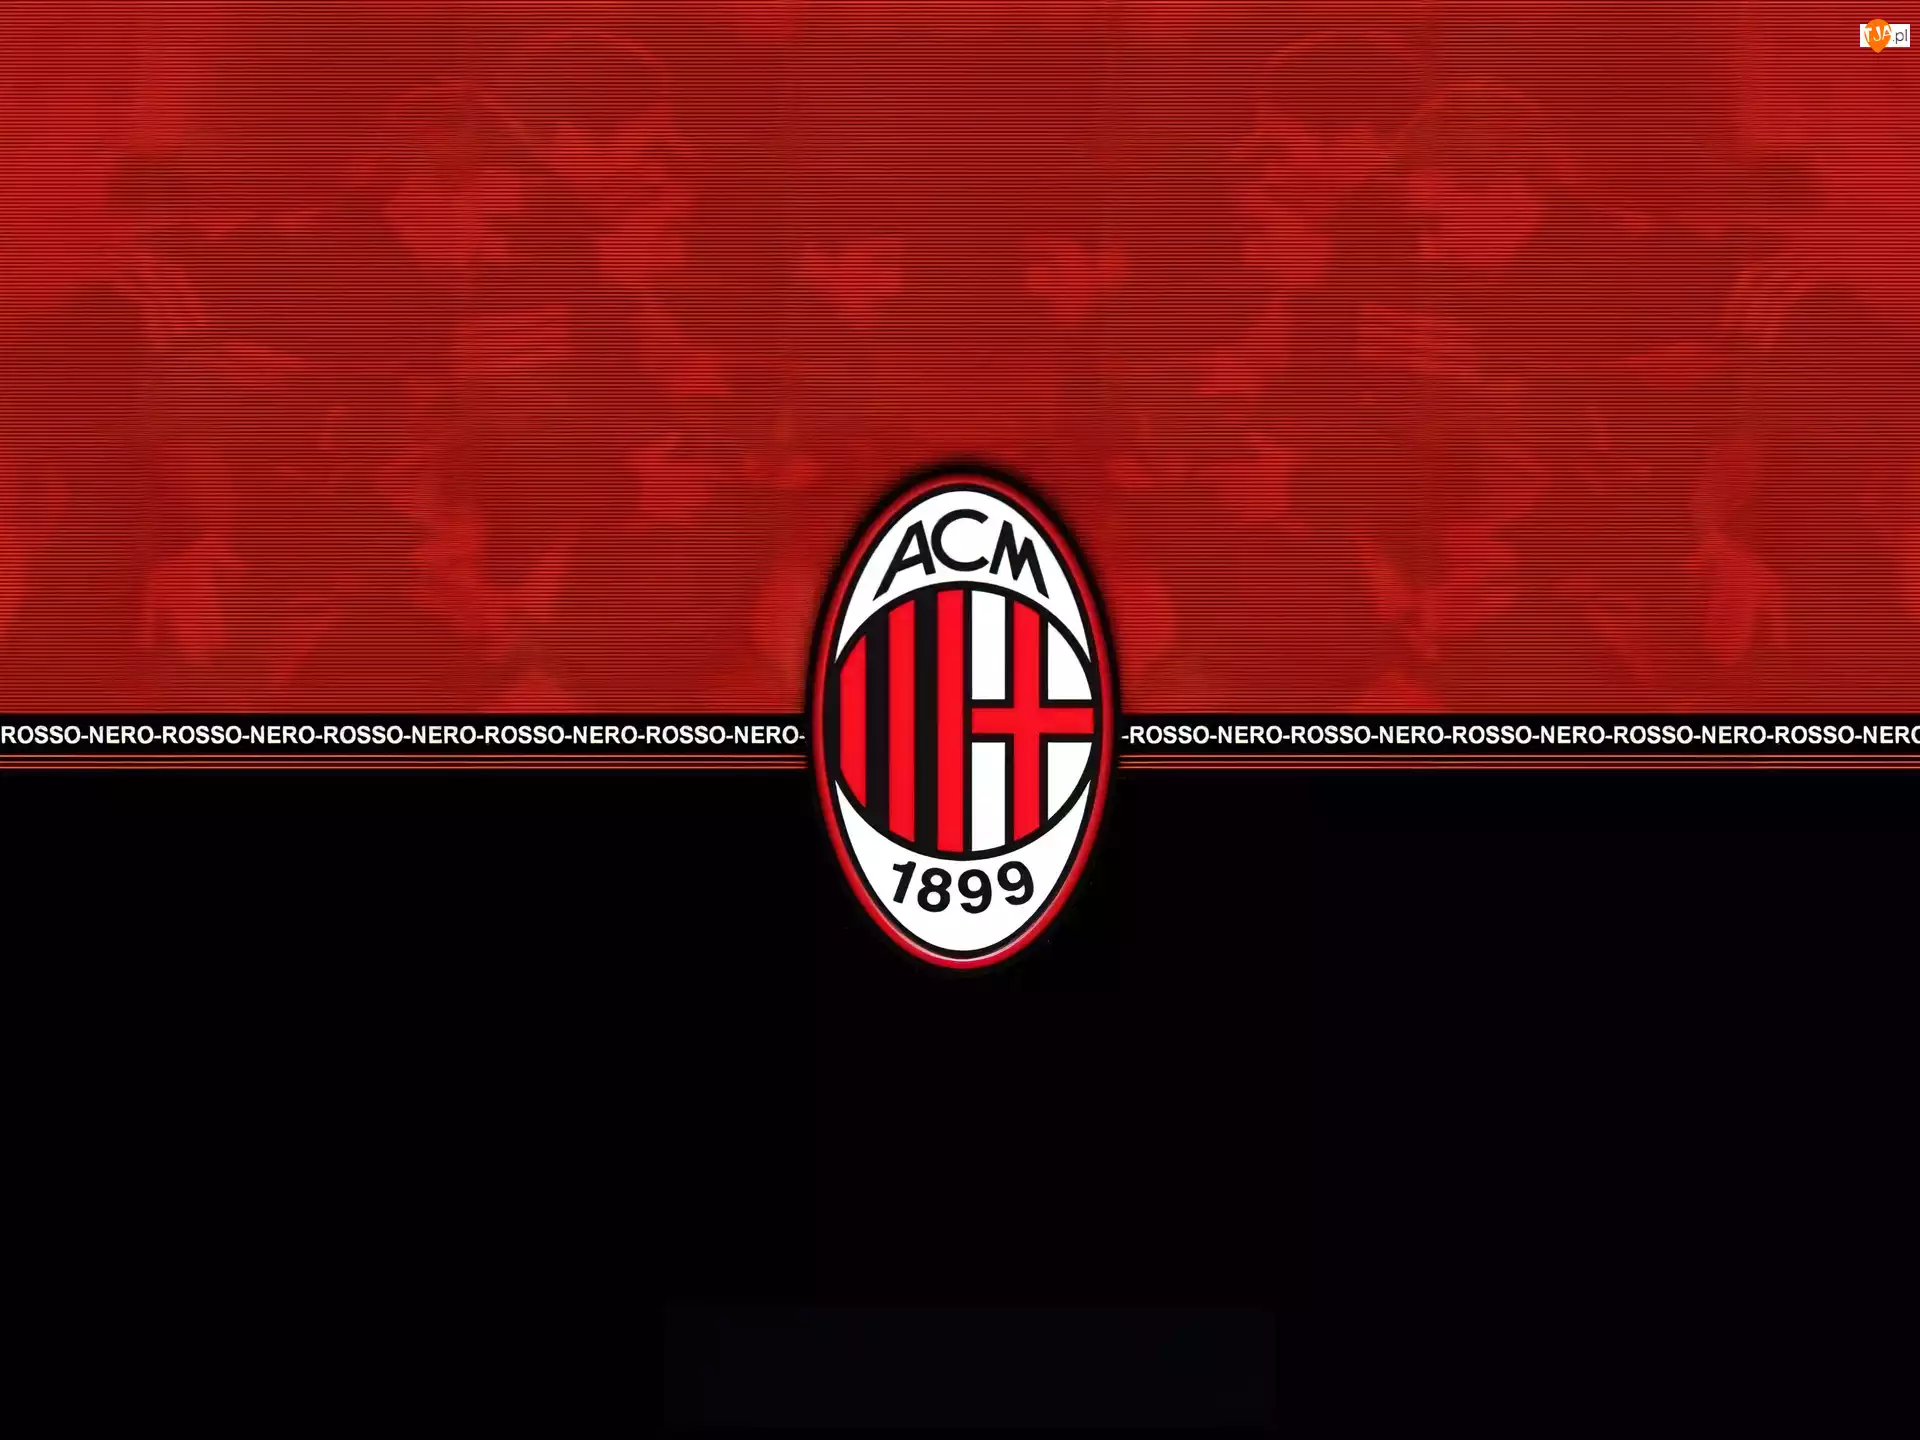 Piłka nożna, znaczek Milanu